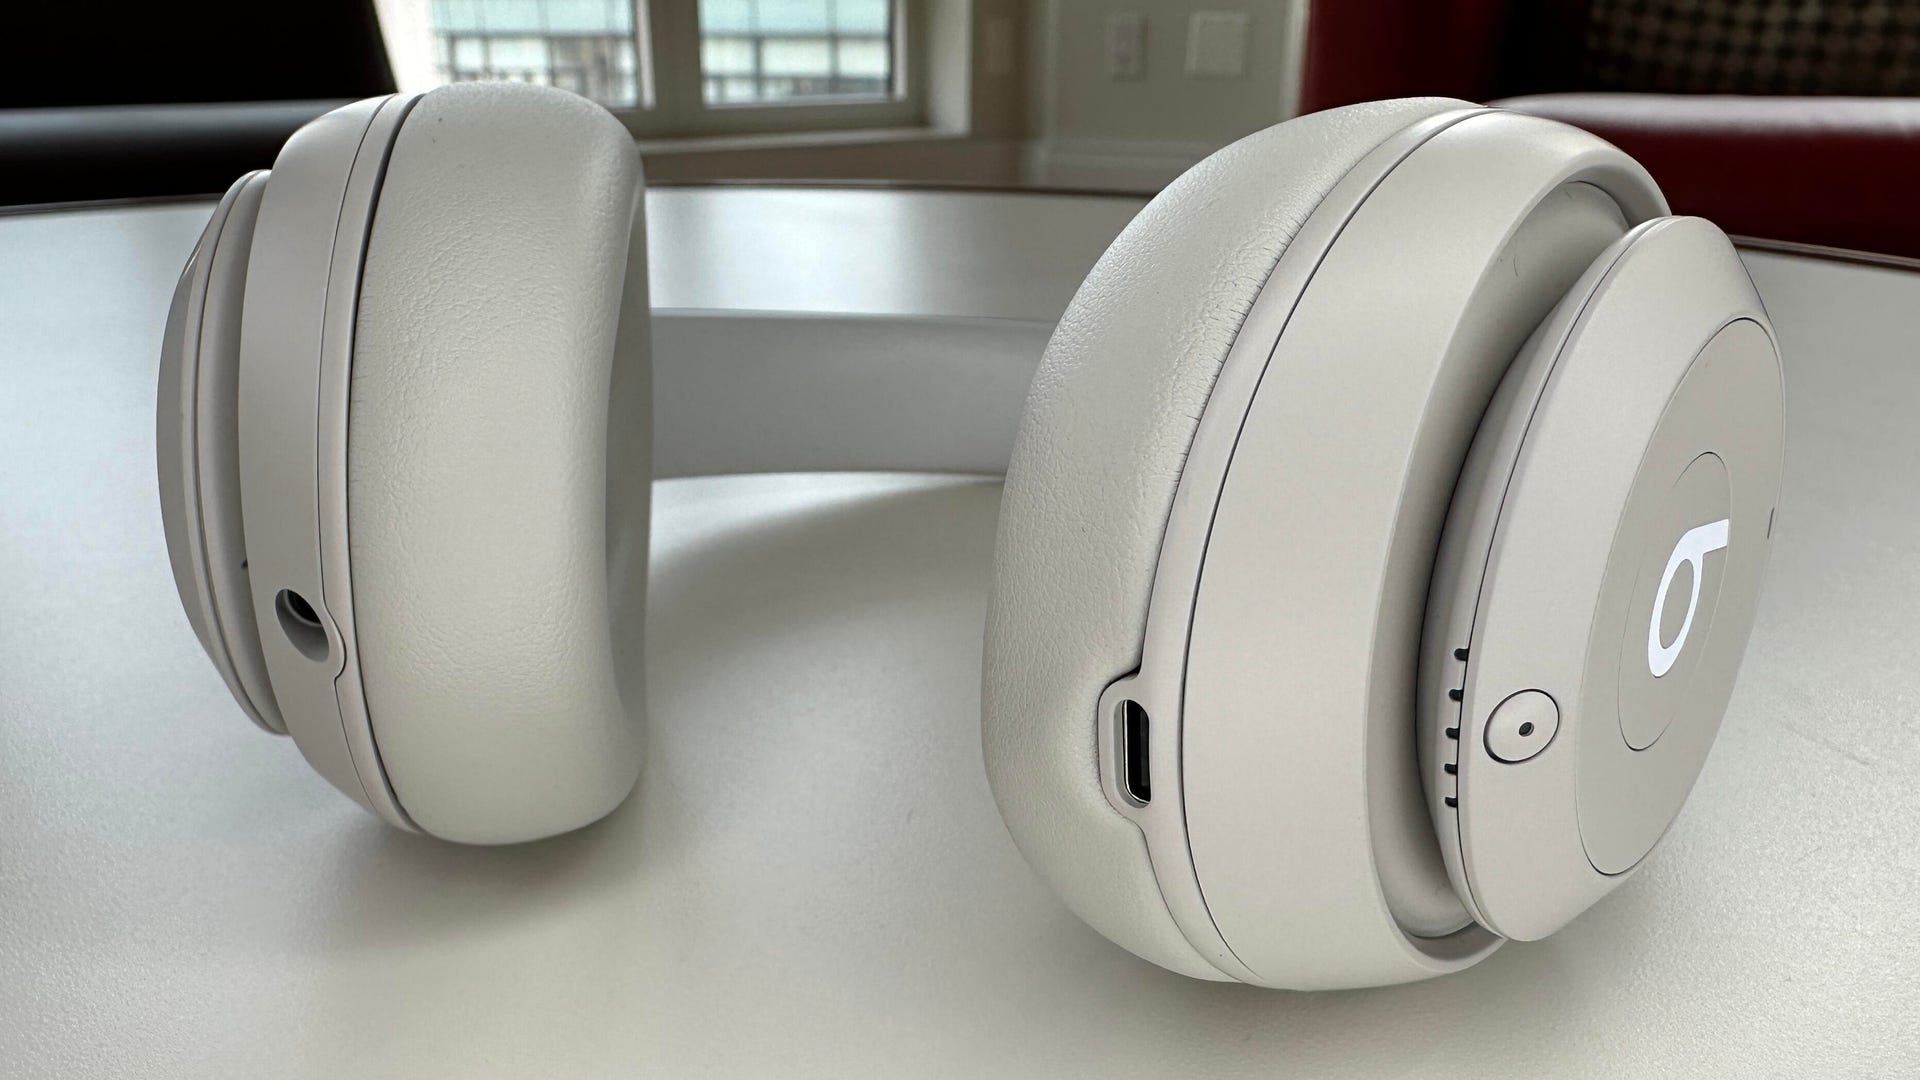 The Beats Studio Pro headphone charge via USB-C and also transmit audio via USB-C